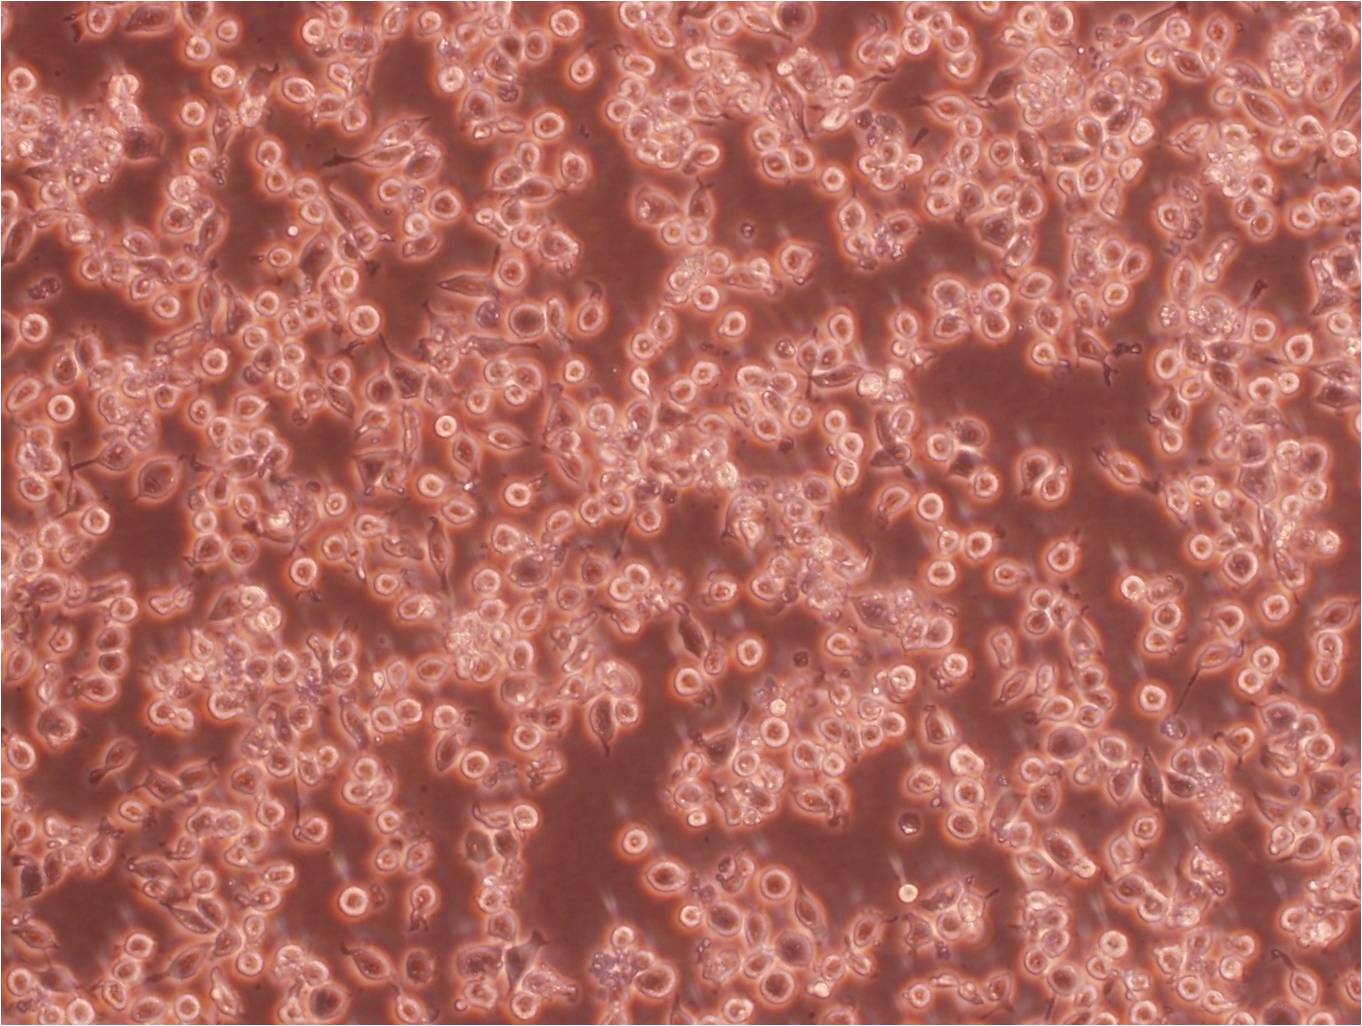 Granta-519 Cell:人类B细胞淋巴癌细胞系